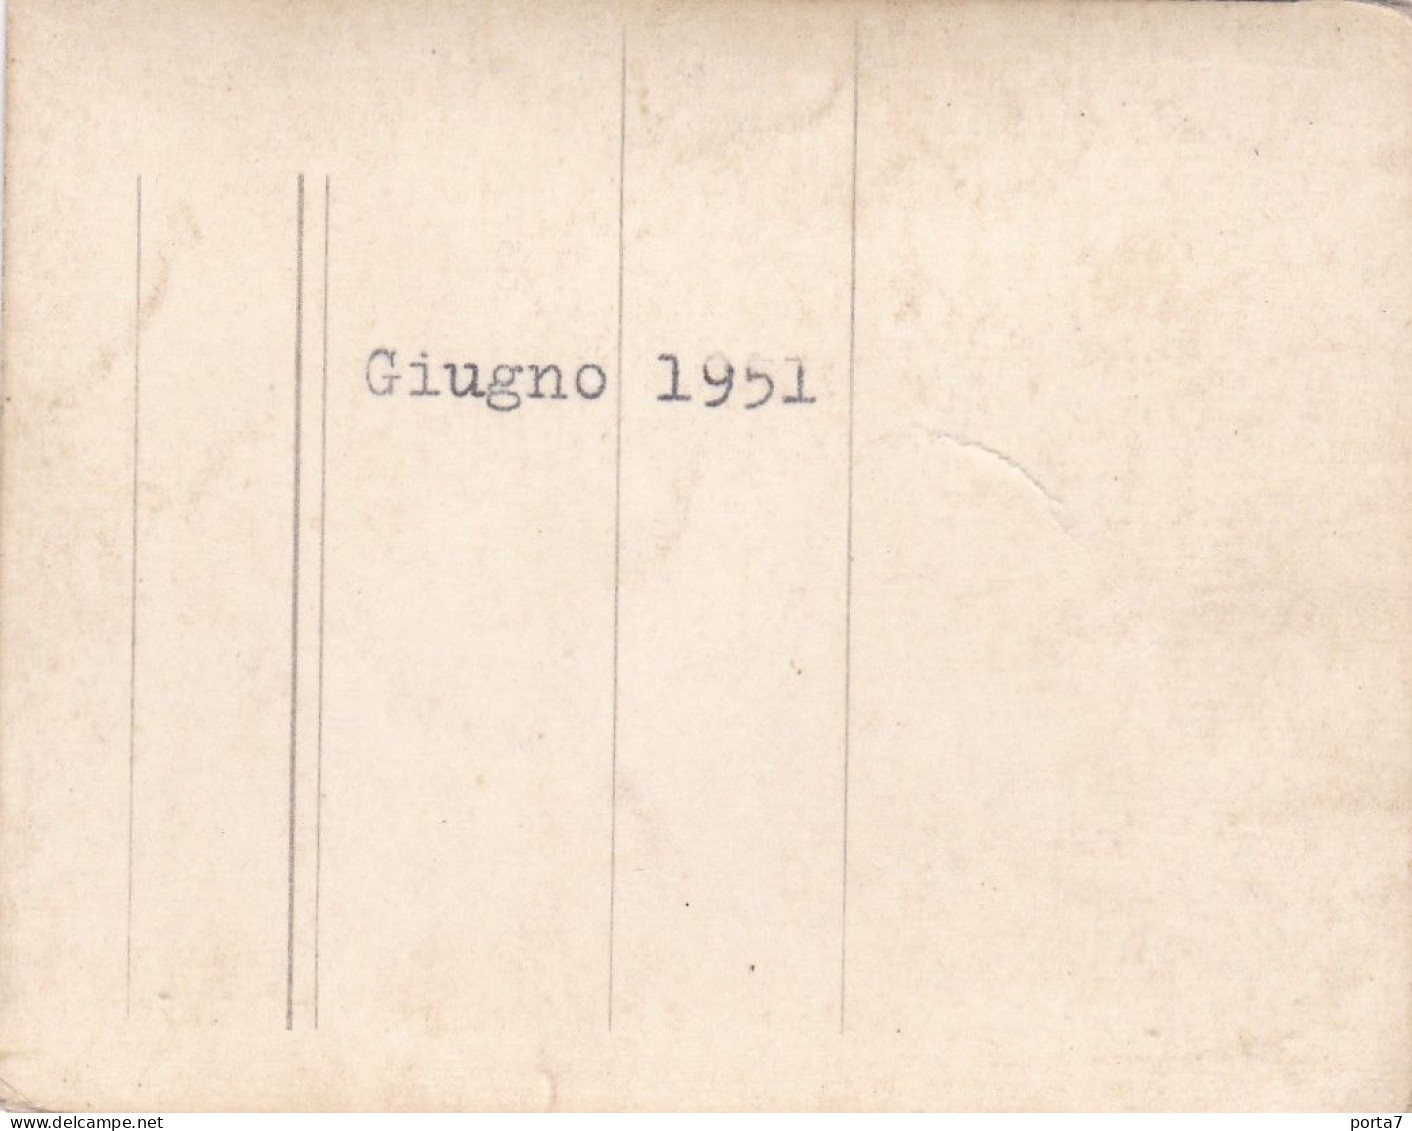 LUNA PARK TIRO A SEGNO - FOTO FLASH - TIR A LA CARABINE  - FOTO  ORIGINALE 1951 - Personnes Anonymes